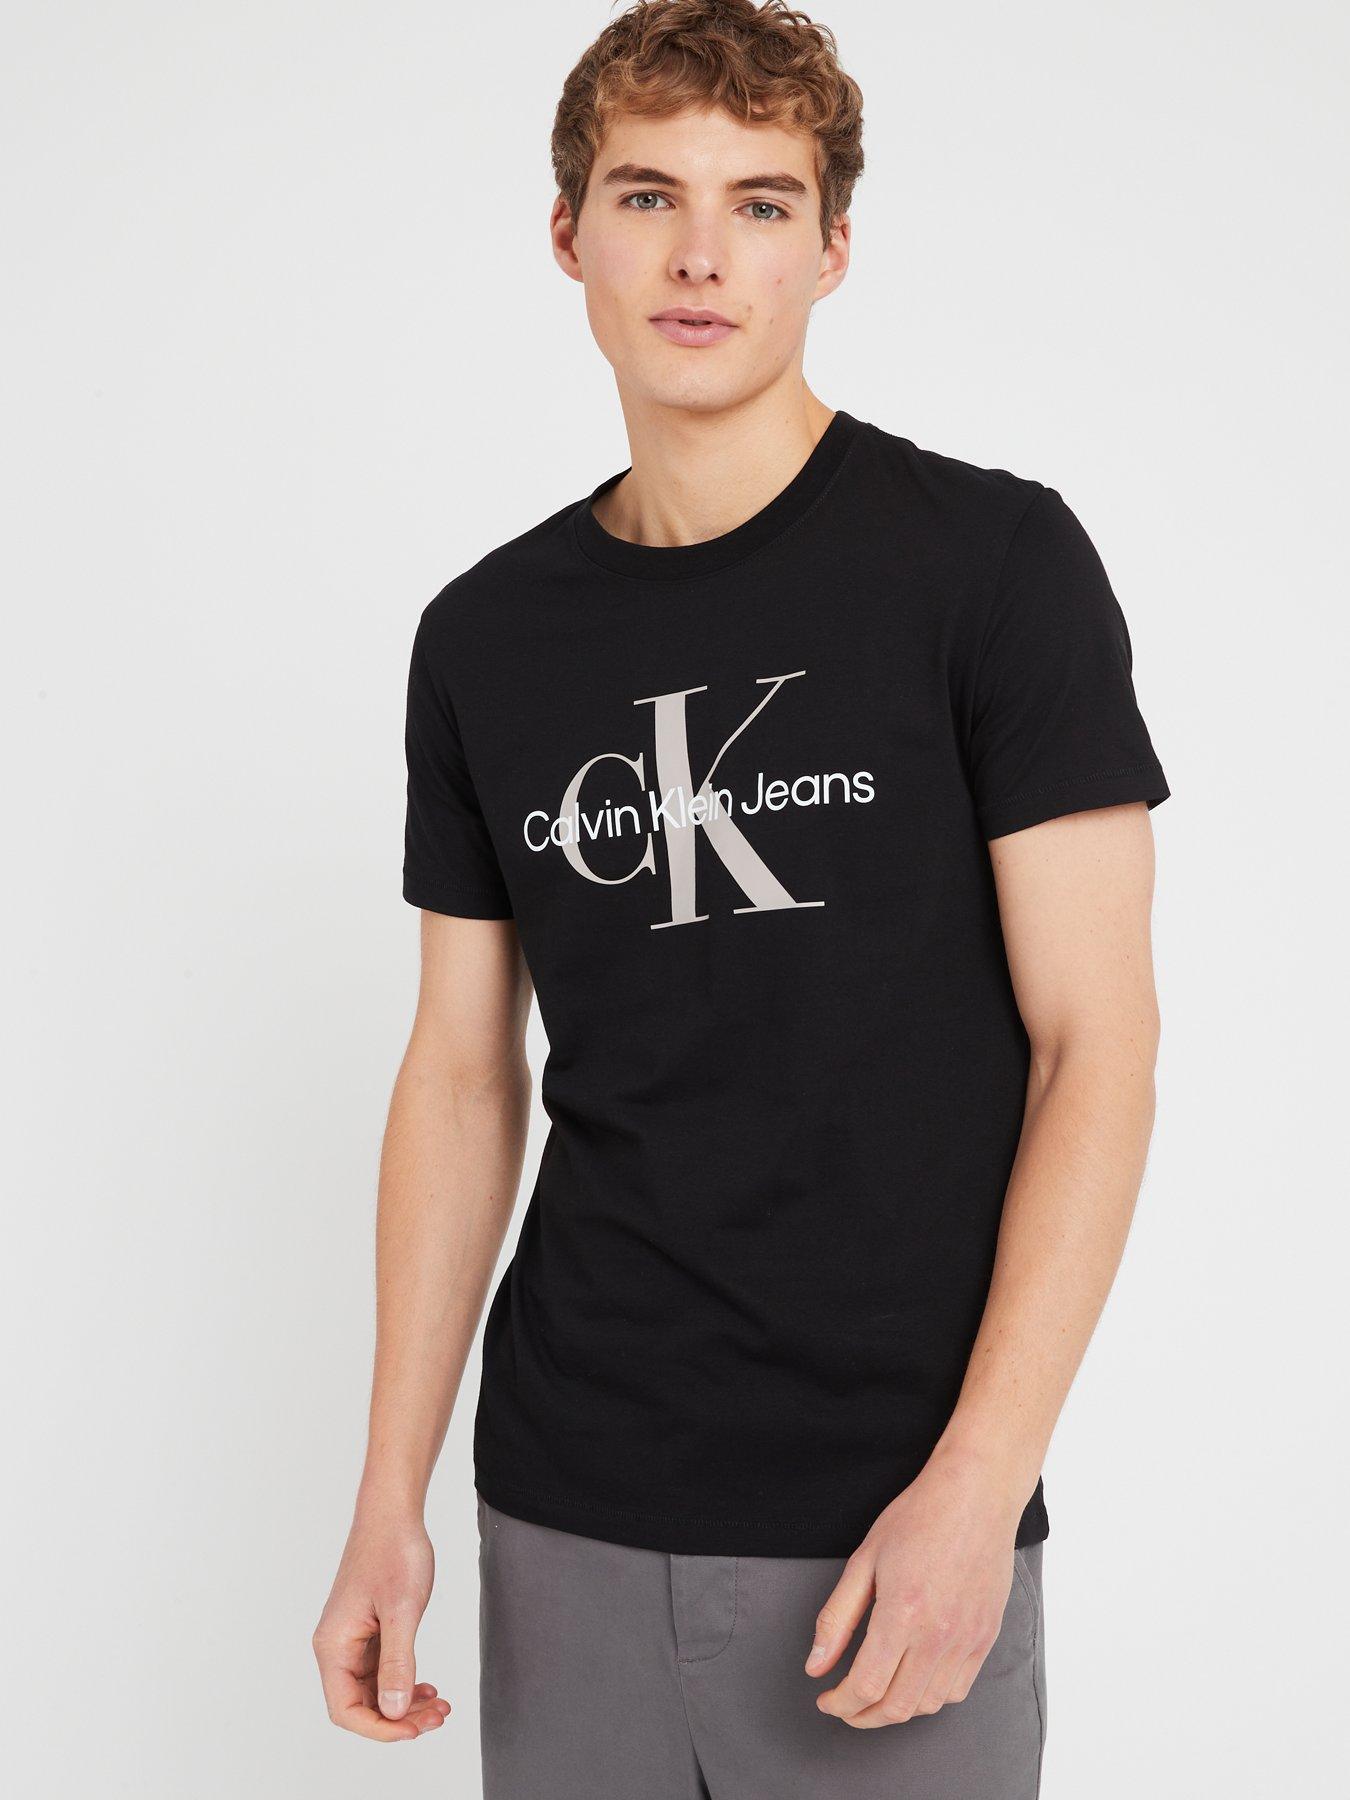 Men | polos & Calvin Black Very T-shirts | klein | Ireland |